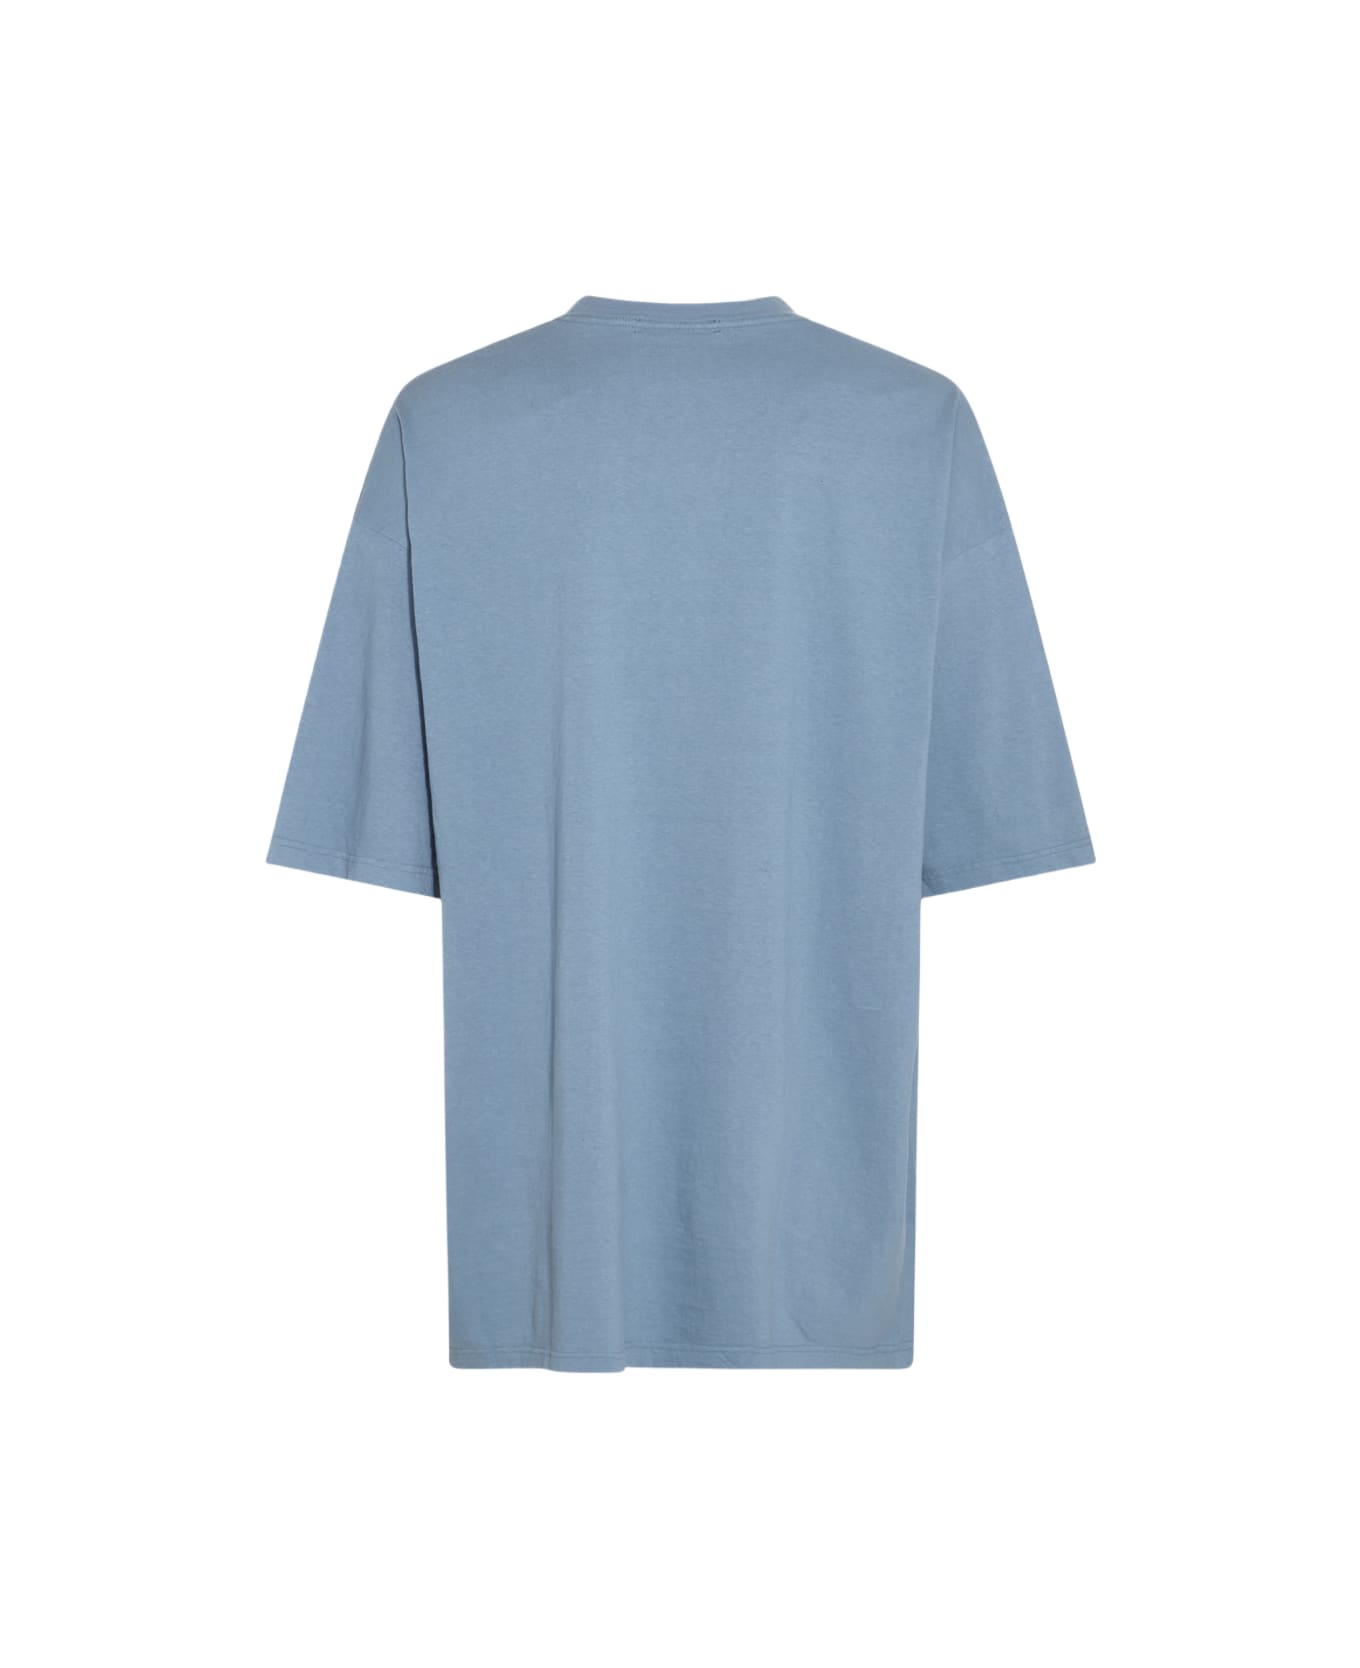 Undercover Jun Takahashi Light Blue Cotton T-shirt シャツ